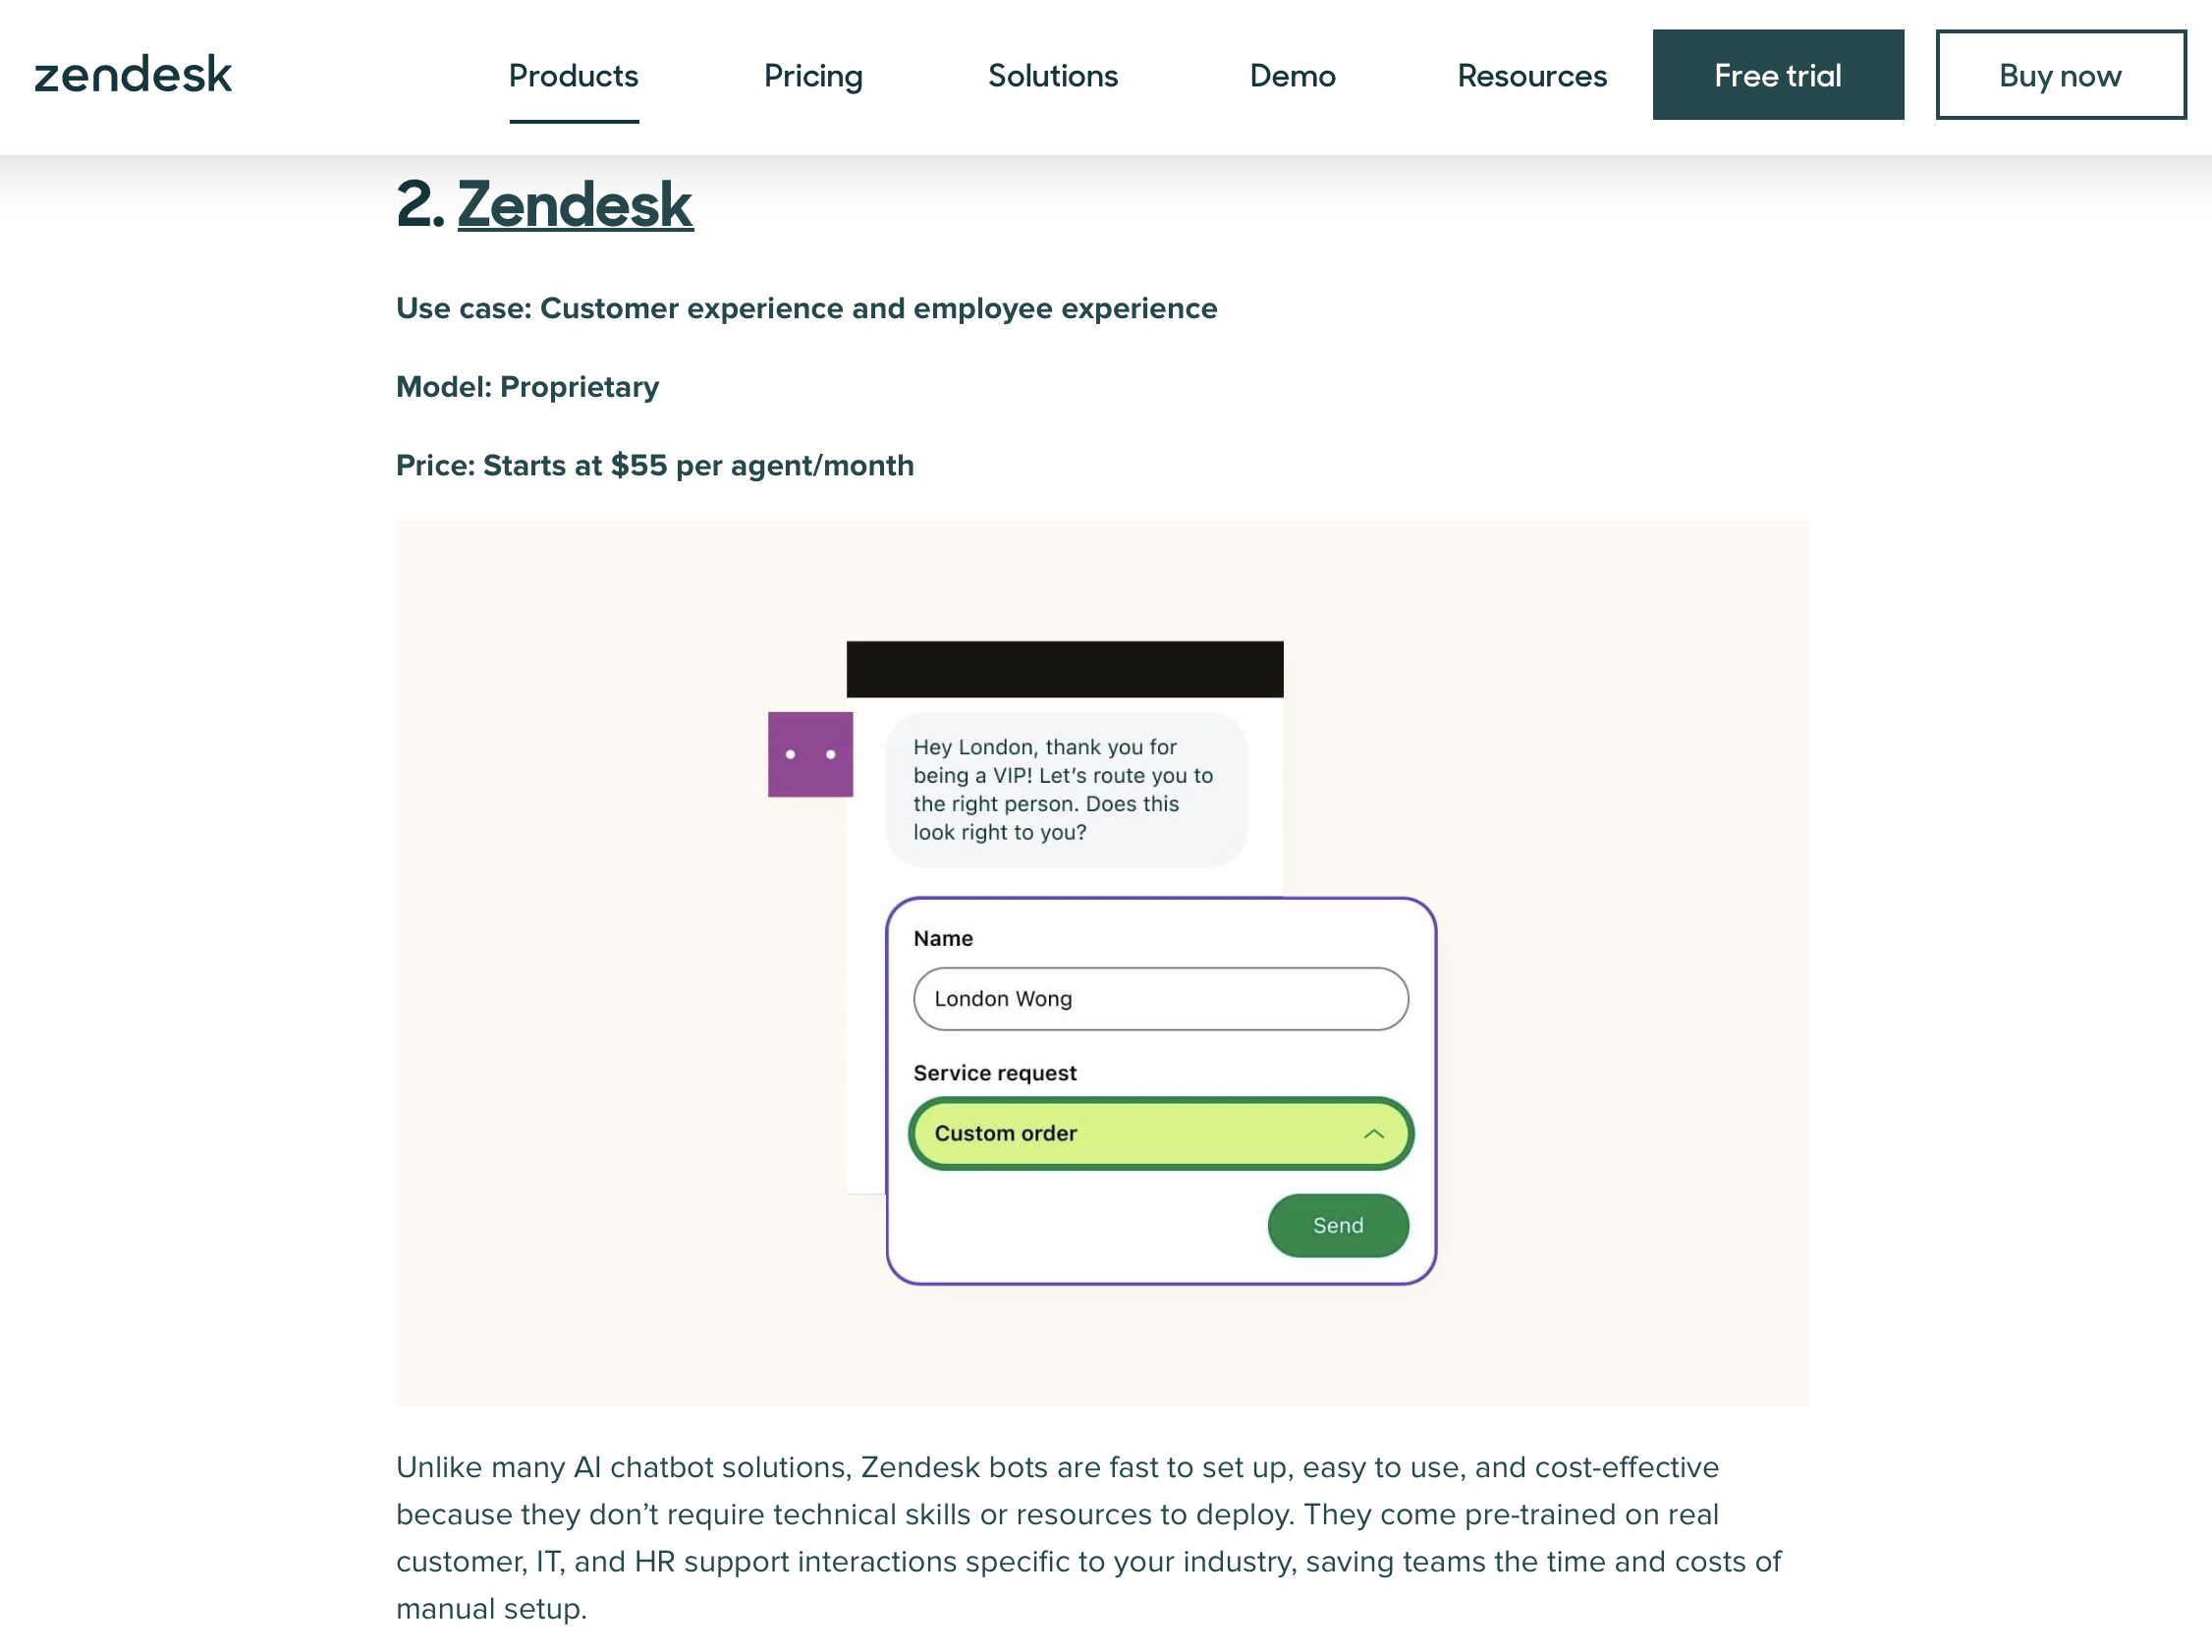 Zendesk's AI chatbot marketing articles